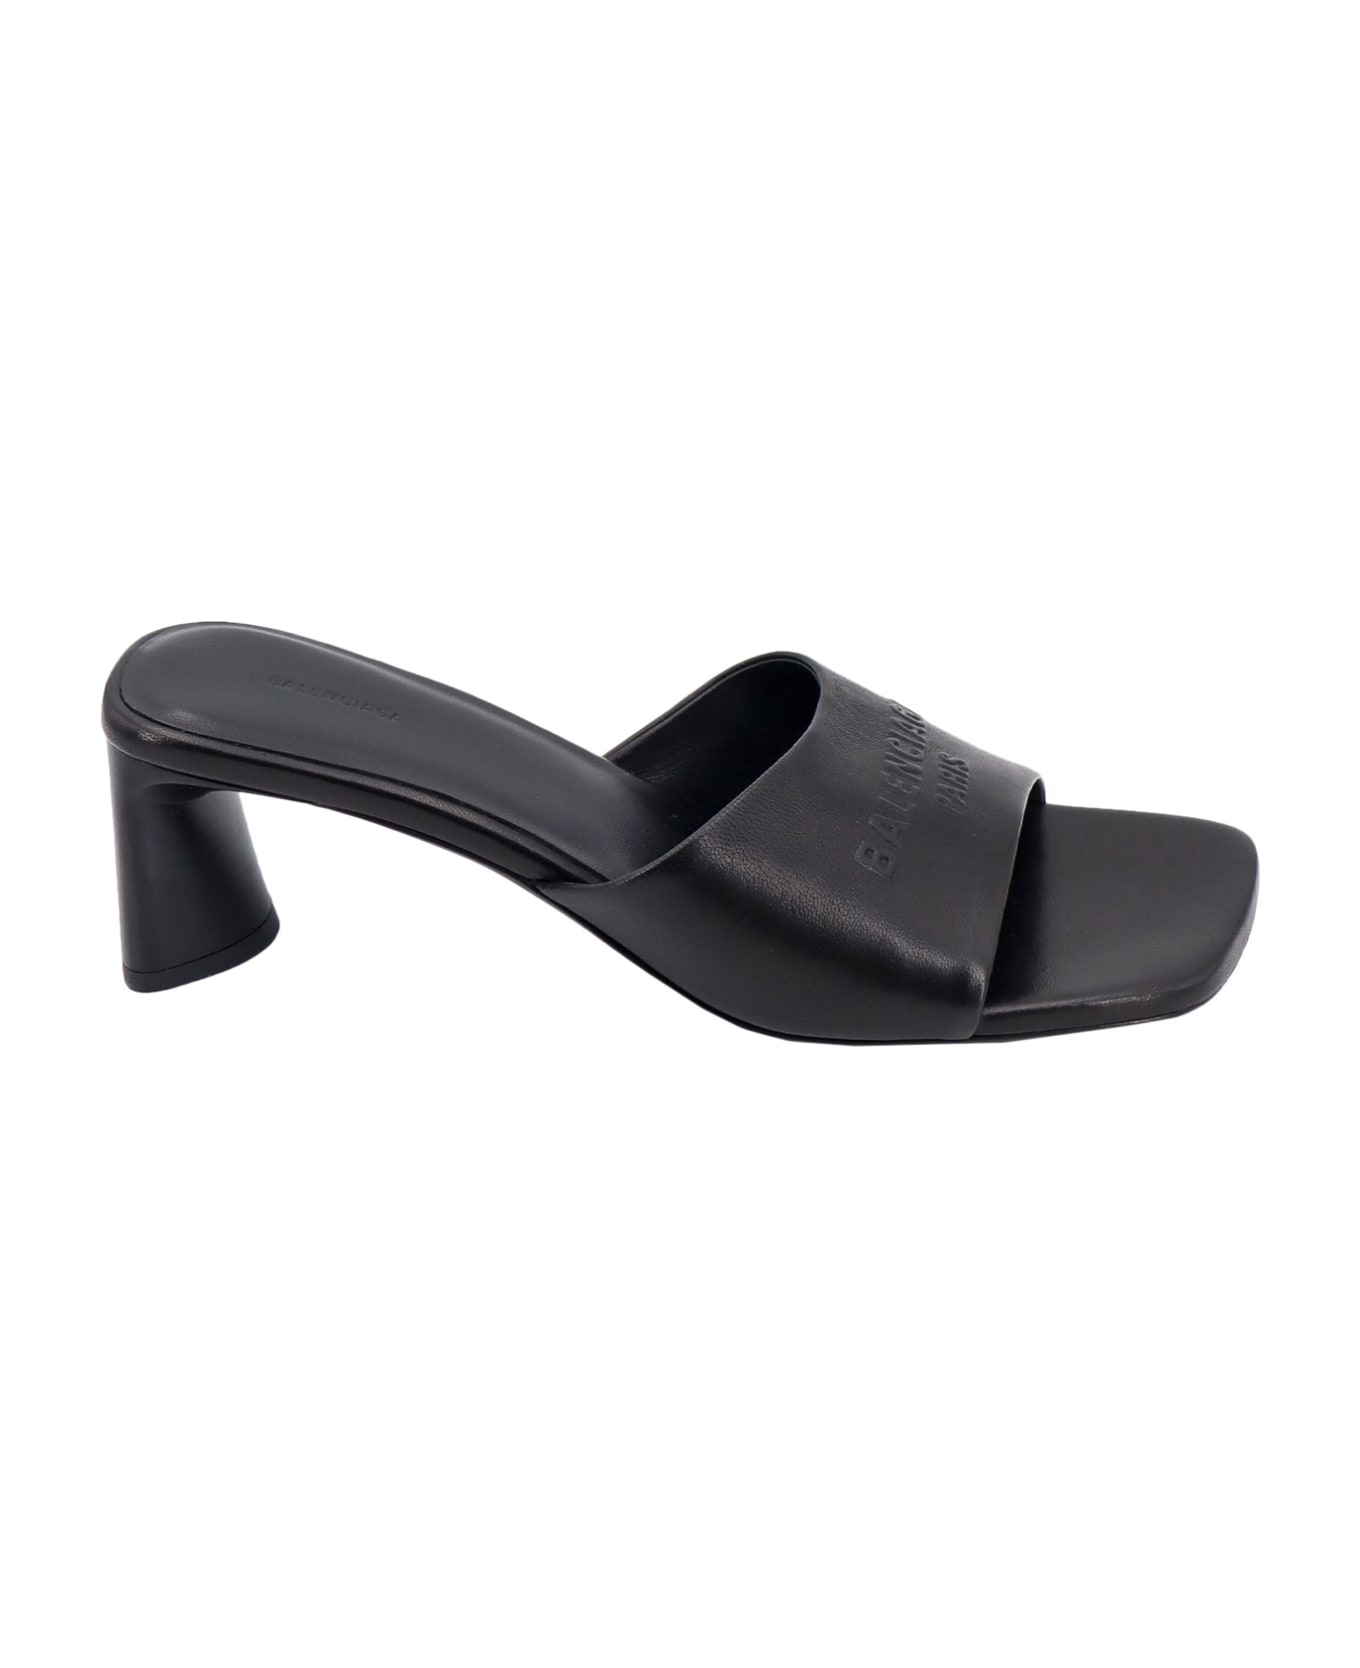 Balenciaga Duty Free Sandals - Black